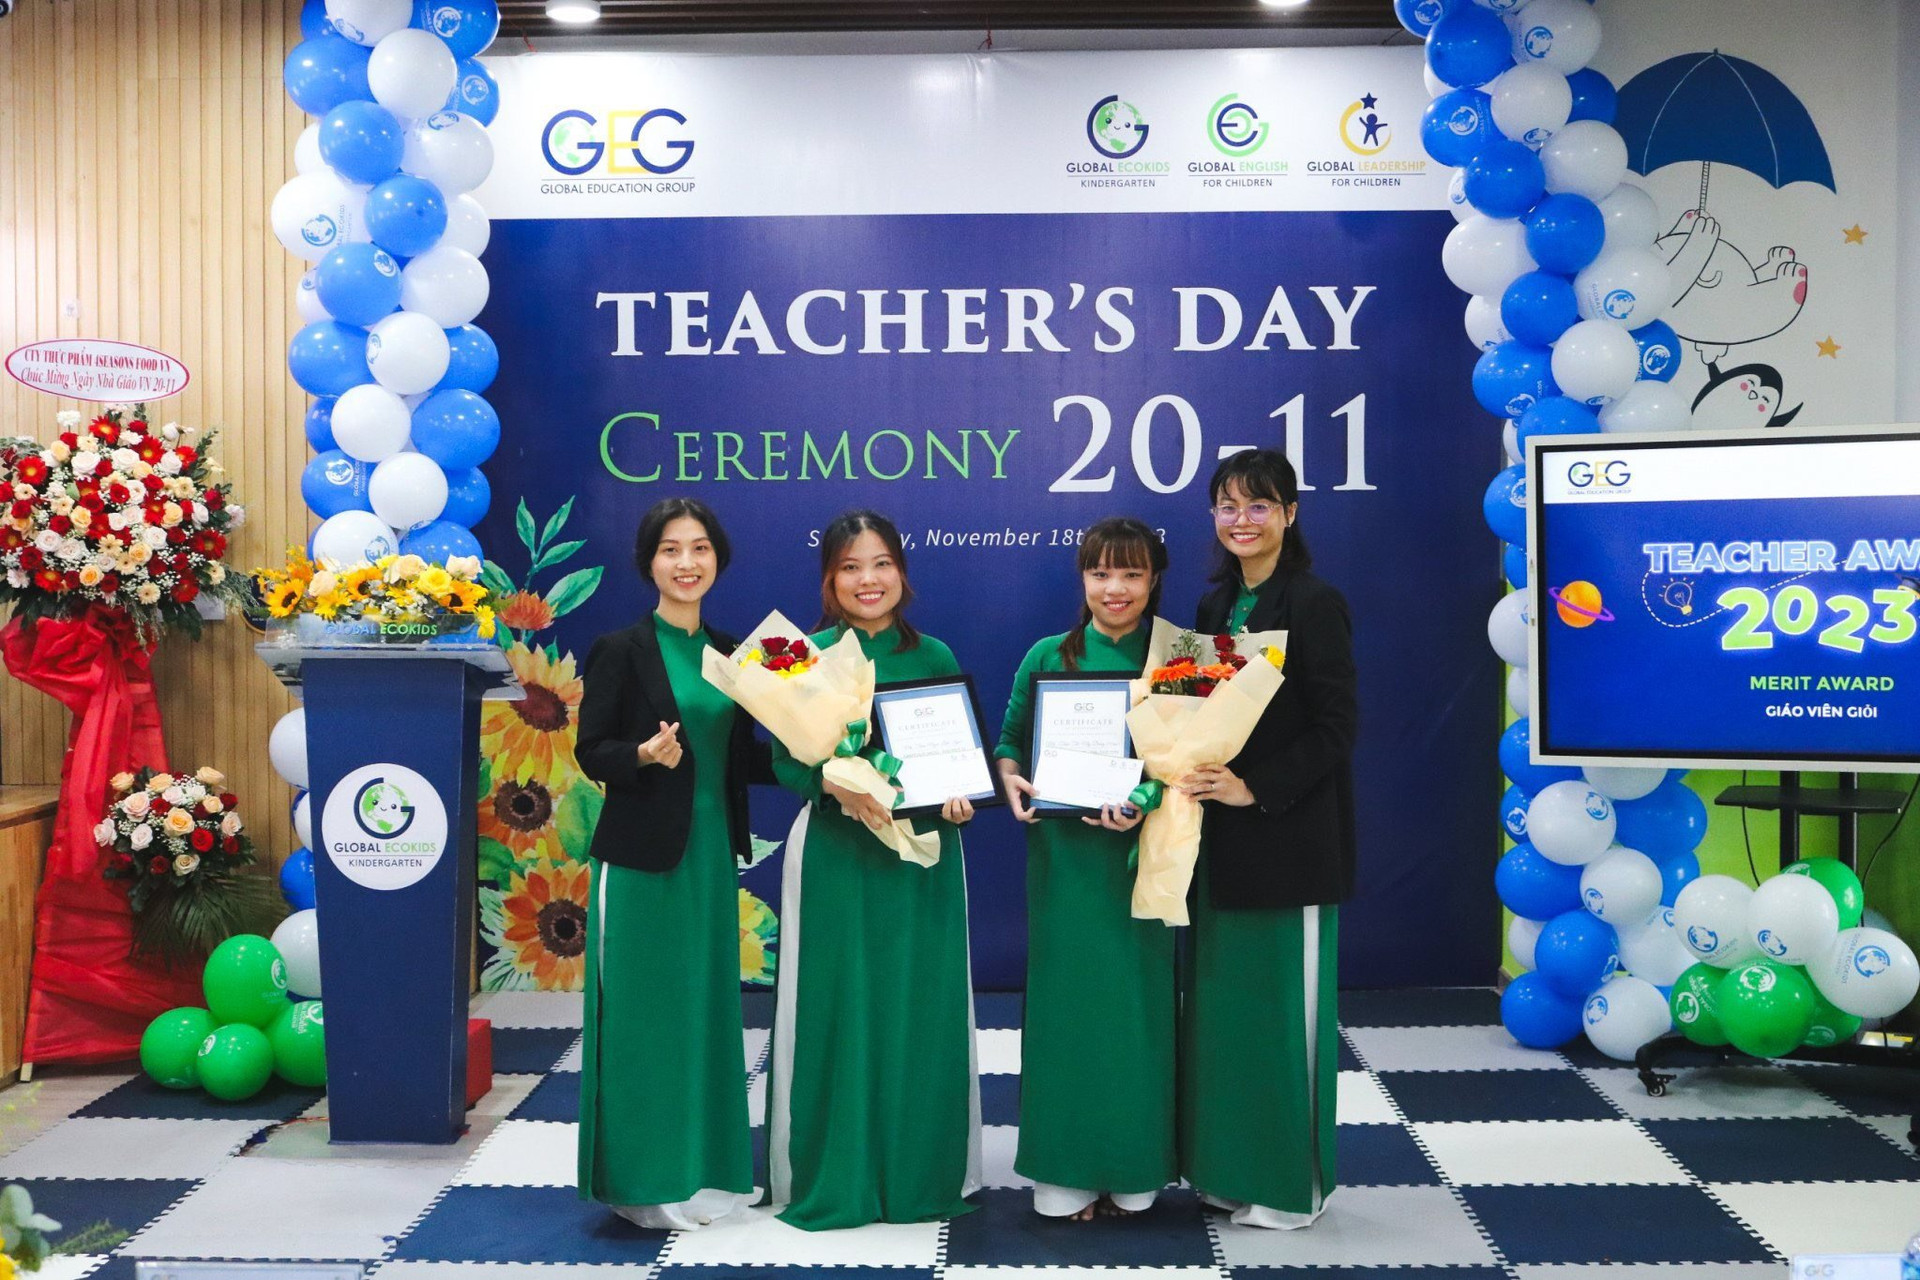 h4-vinh-danh-giai-thuong-giao-vien-gioi-cuoc-thi-global-ecokids-teacher-award-2023-.jpg